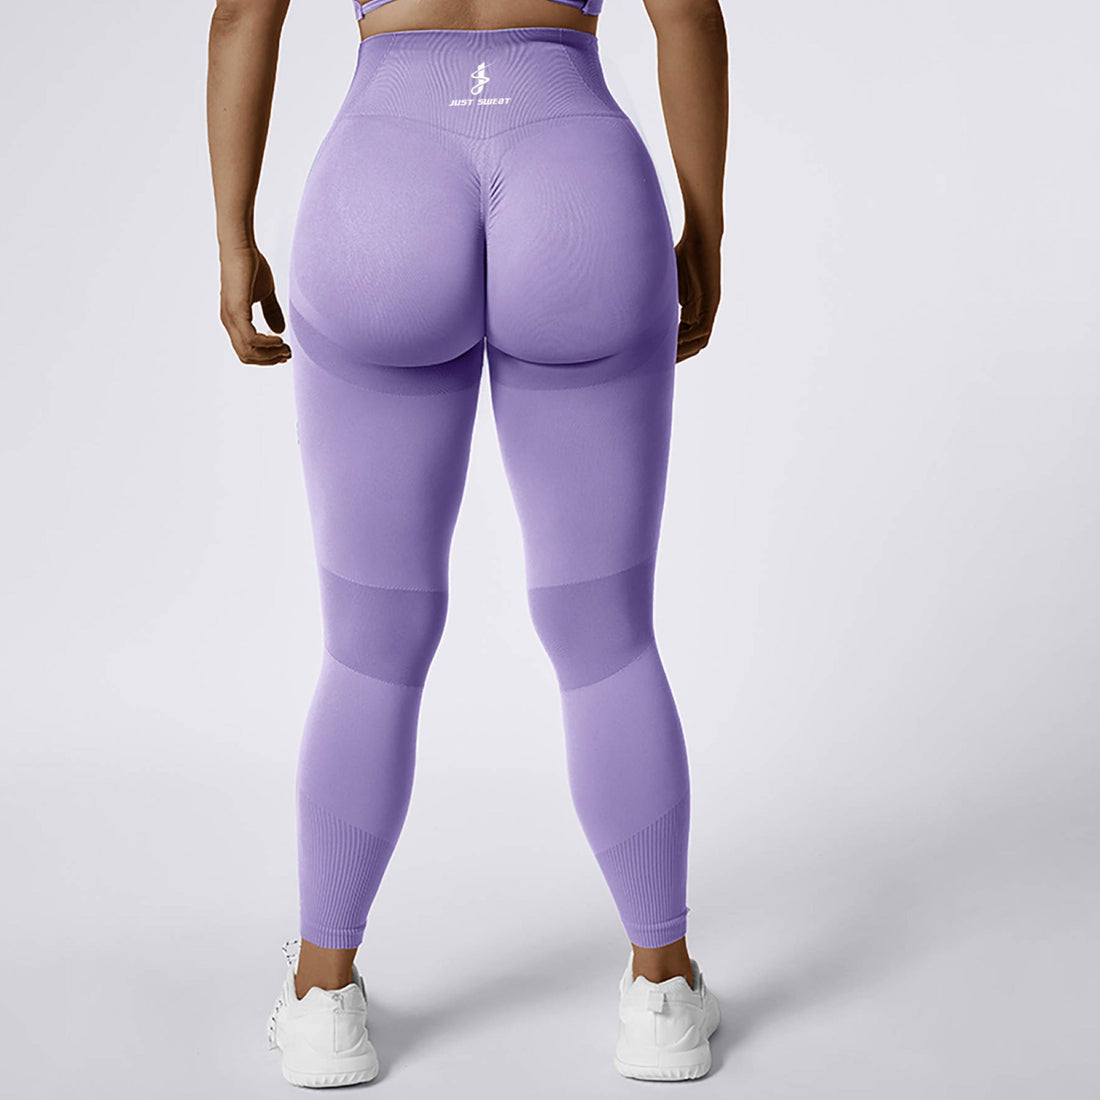 purple sports leggings